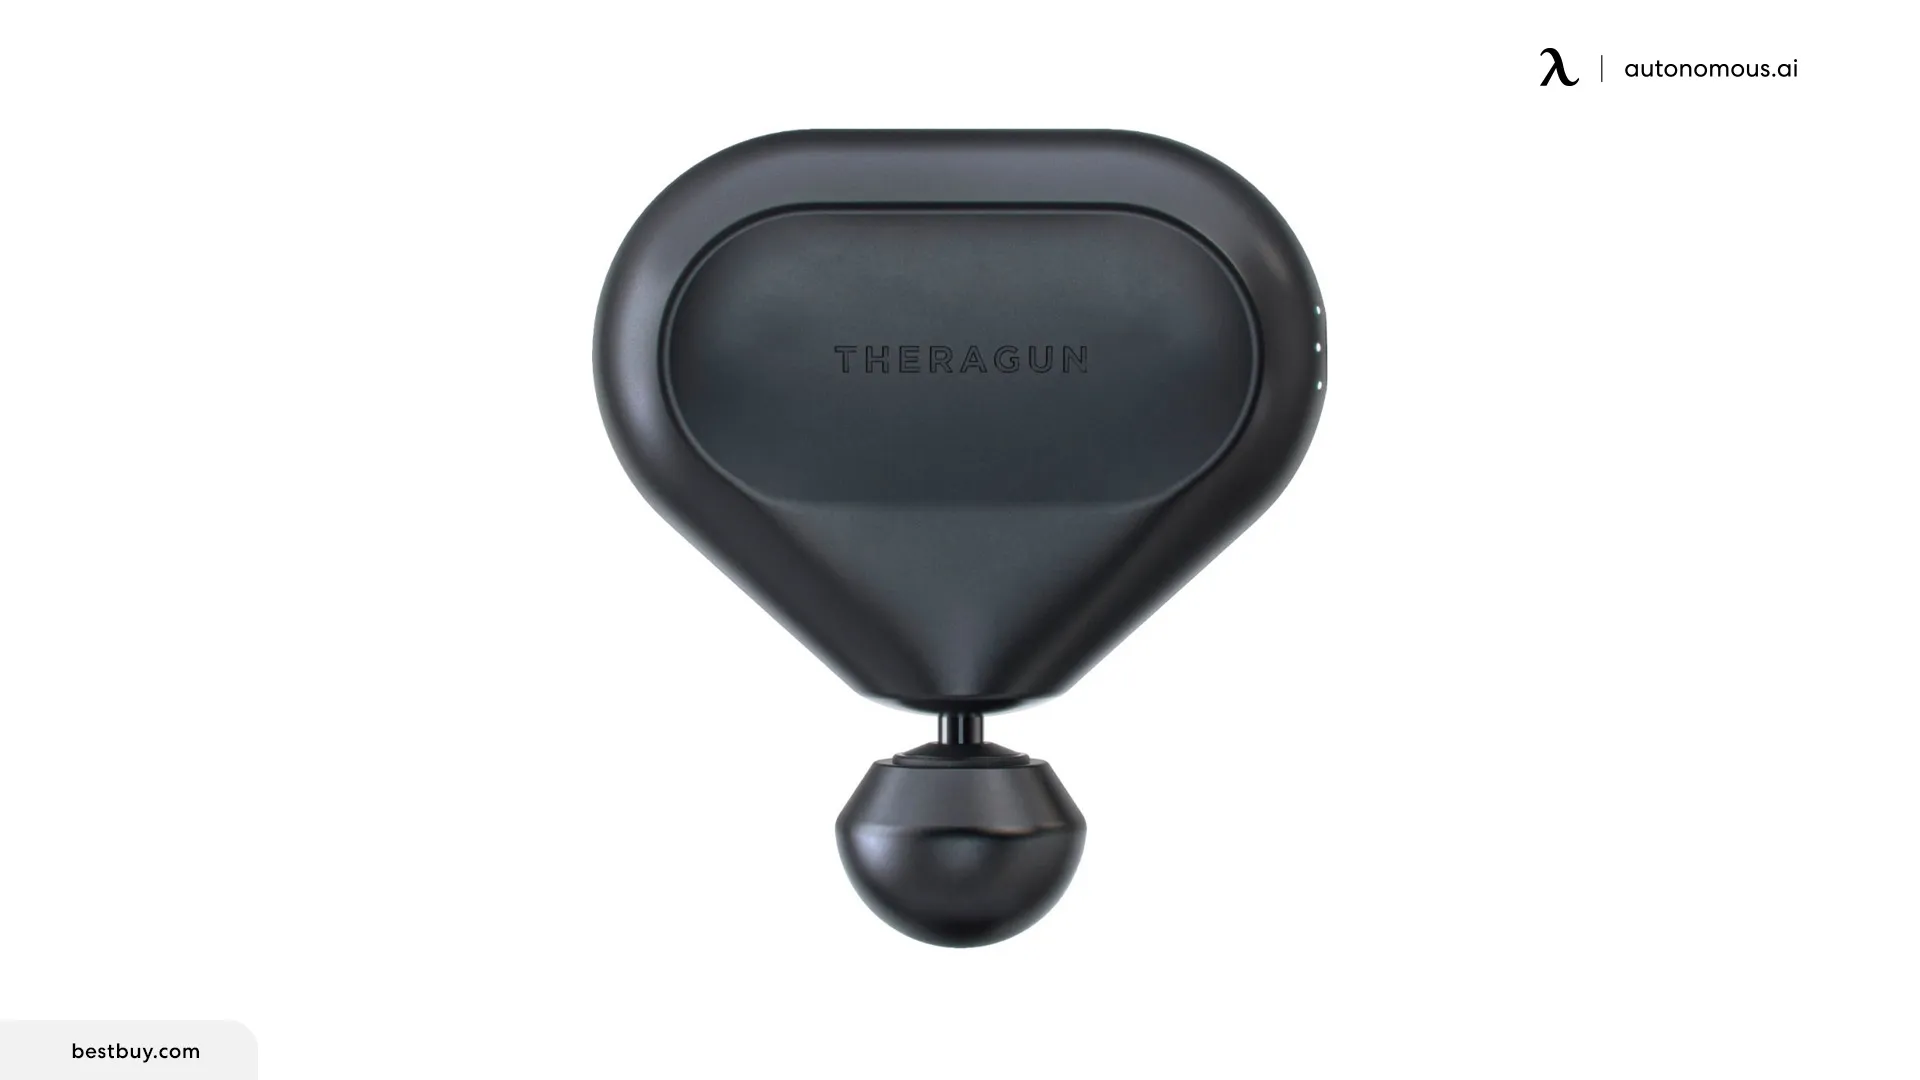 Therabody Handheld Portable Massage Gun Device